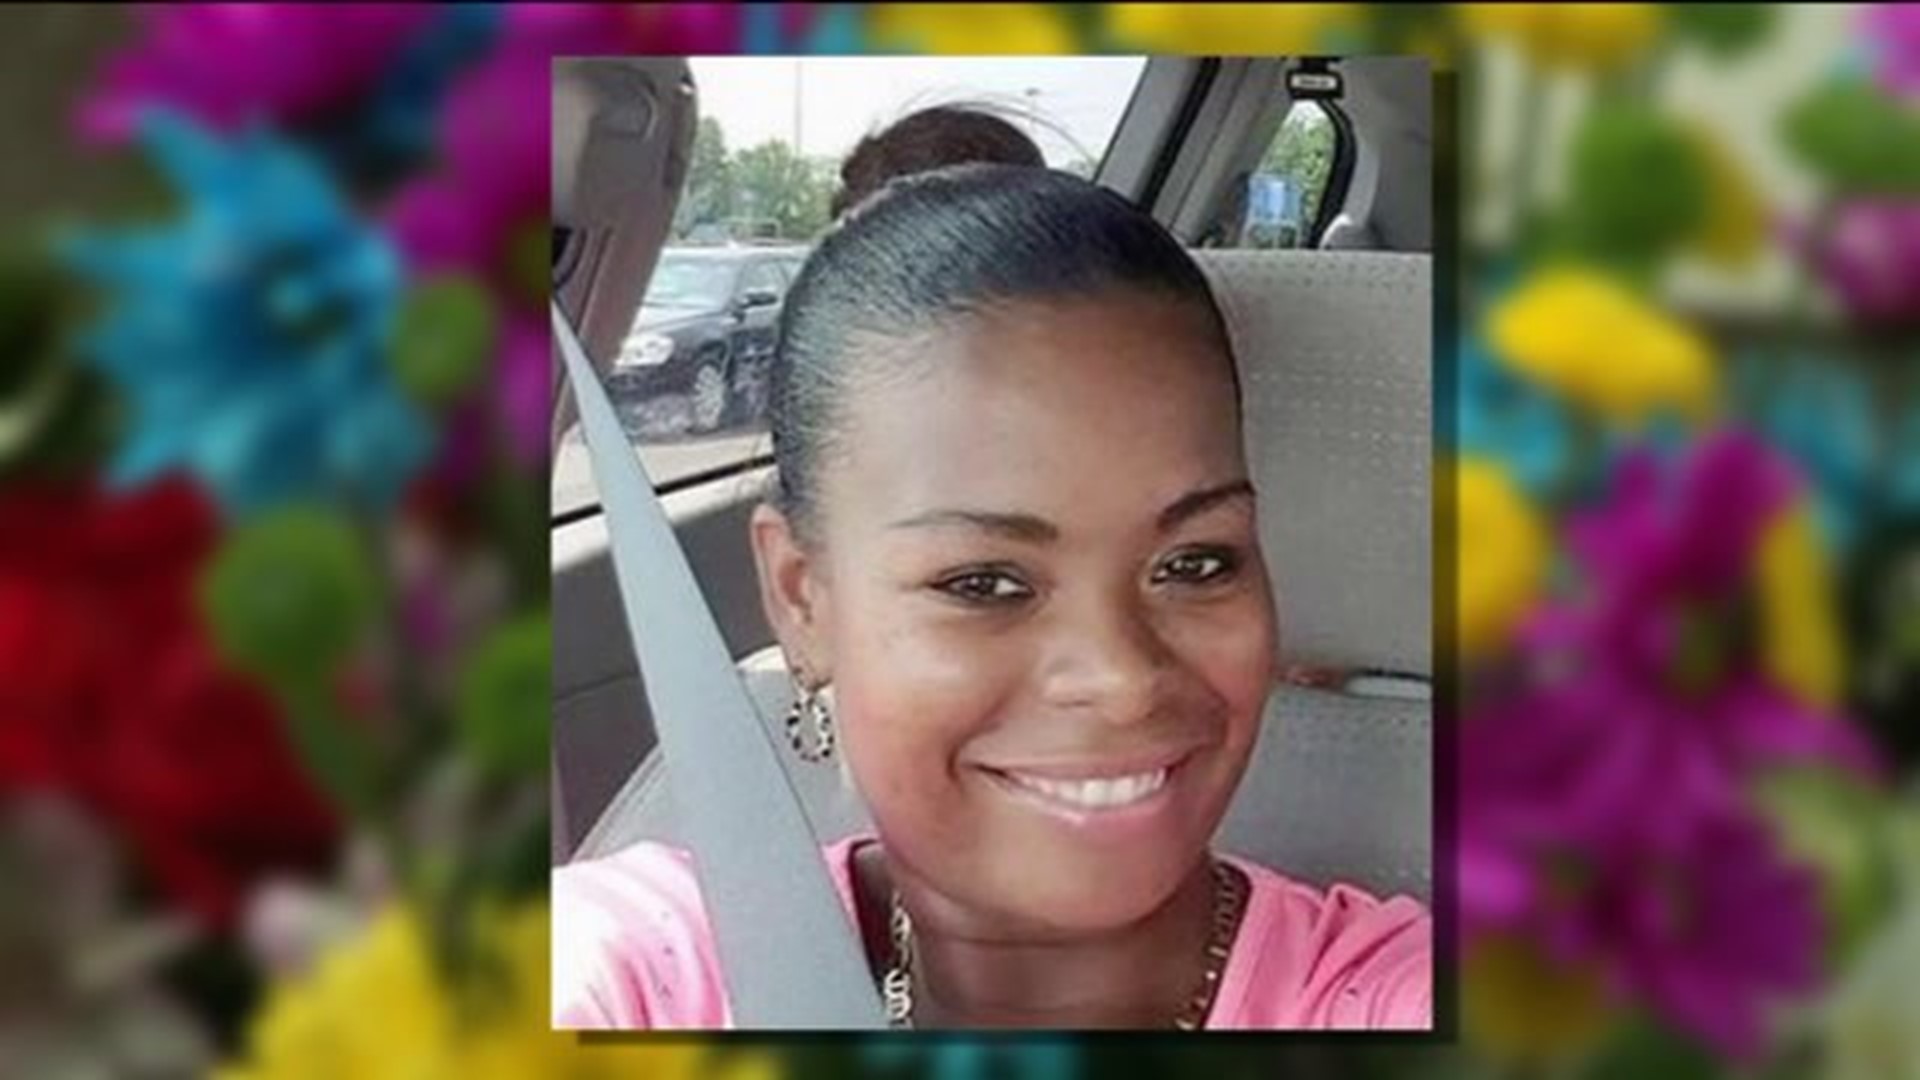 Mother of three killed by boyfriend in murder-suicide